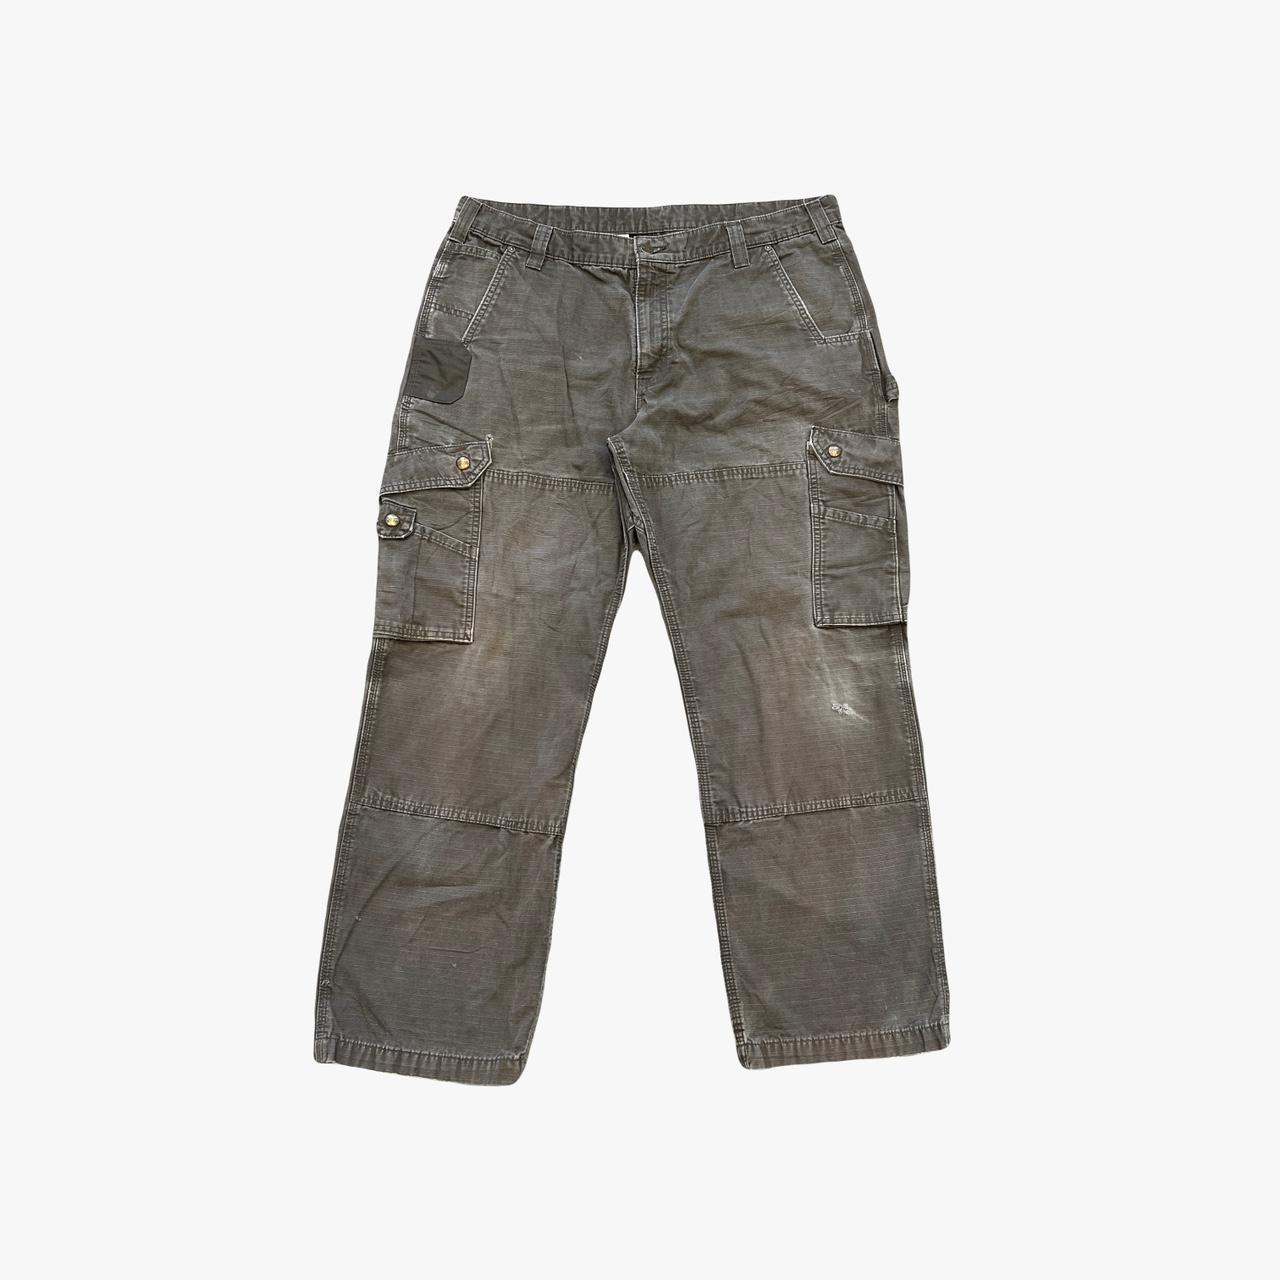 8330GD - Garment Dye Short Shorts